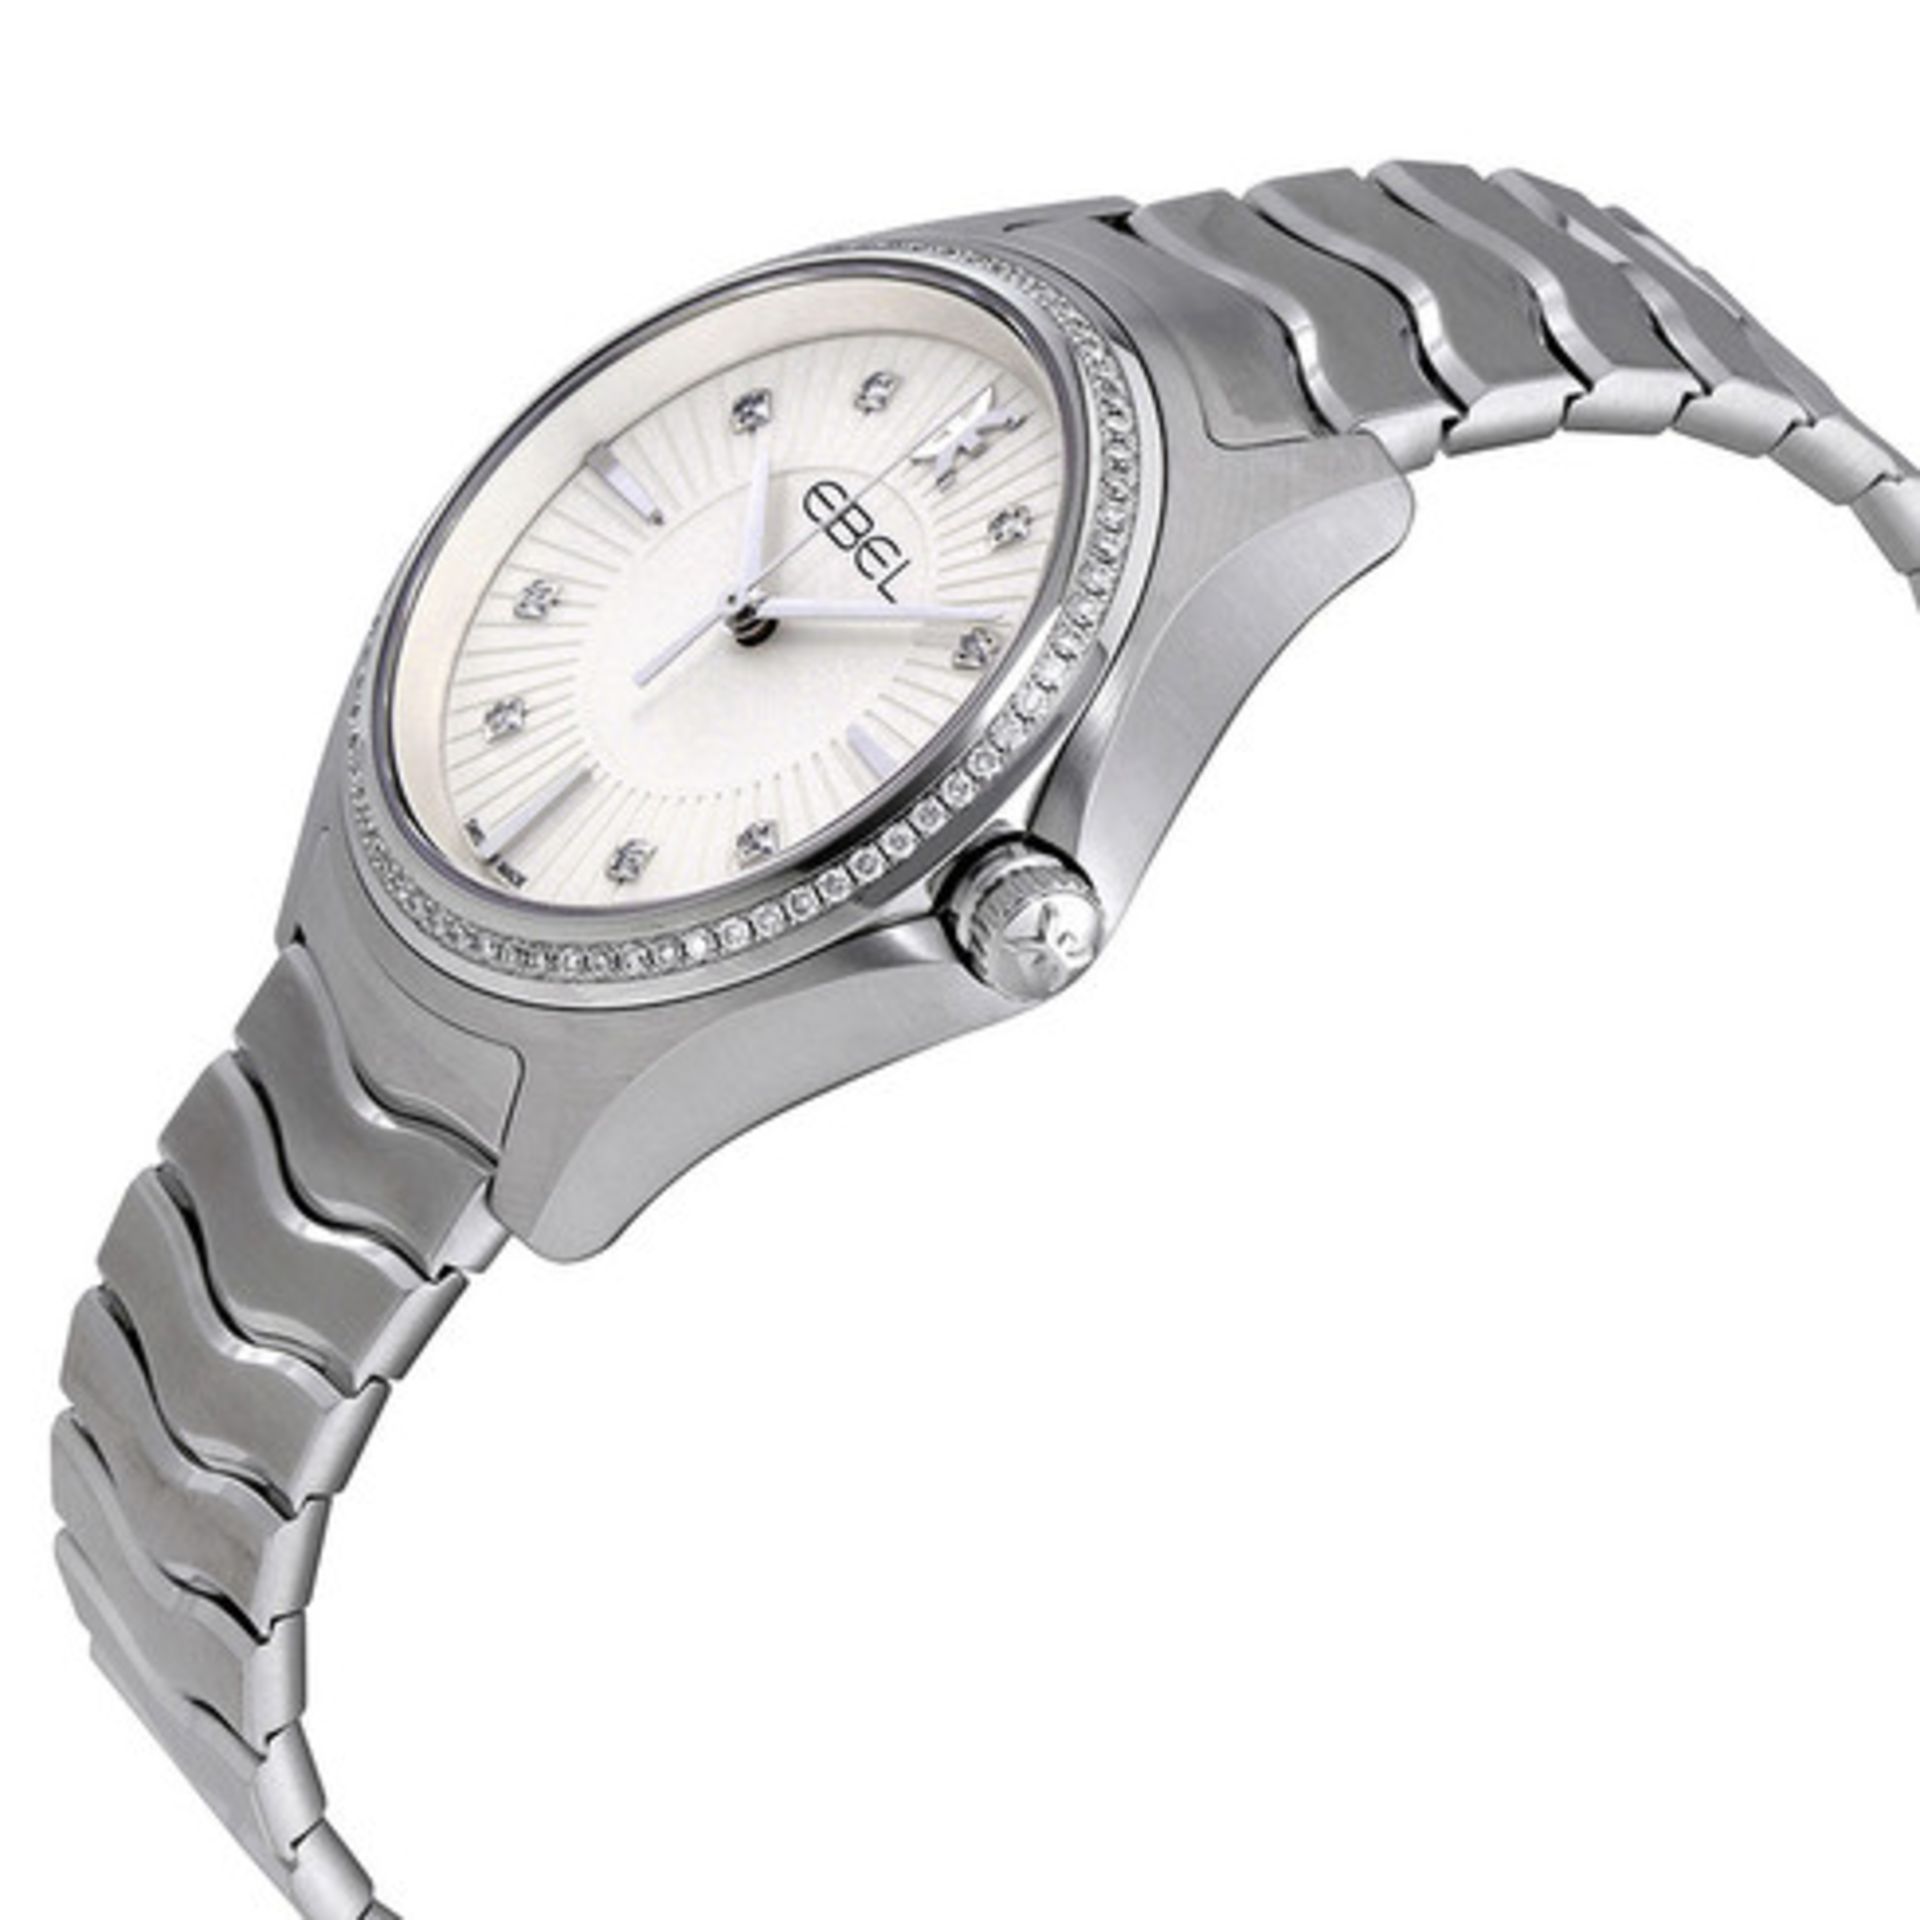 Ebel Ladies Midi 35mm Size Wave Range Watch Reference 1216308, Stainless Steel Bracelet & Case, - Image 2 of 6